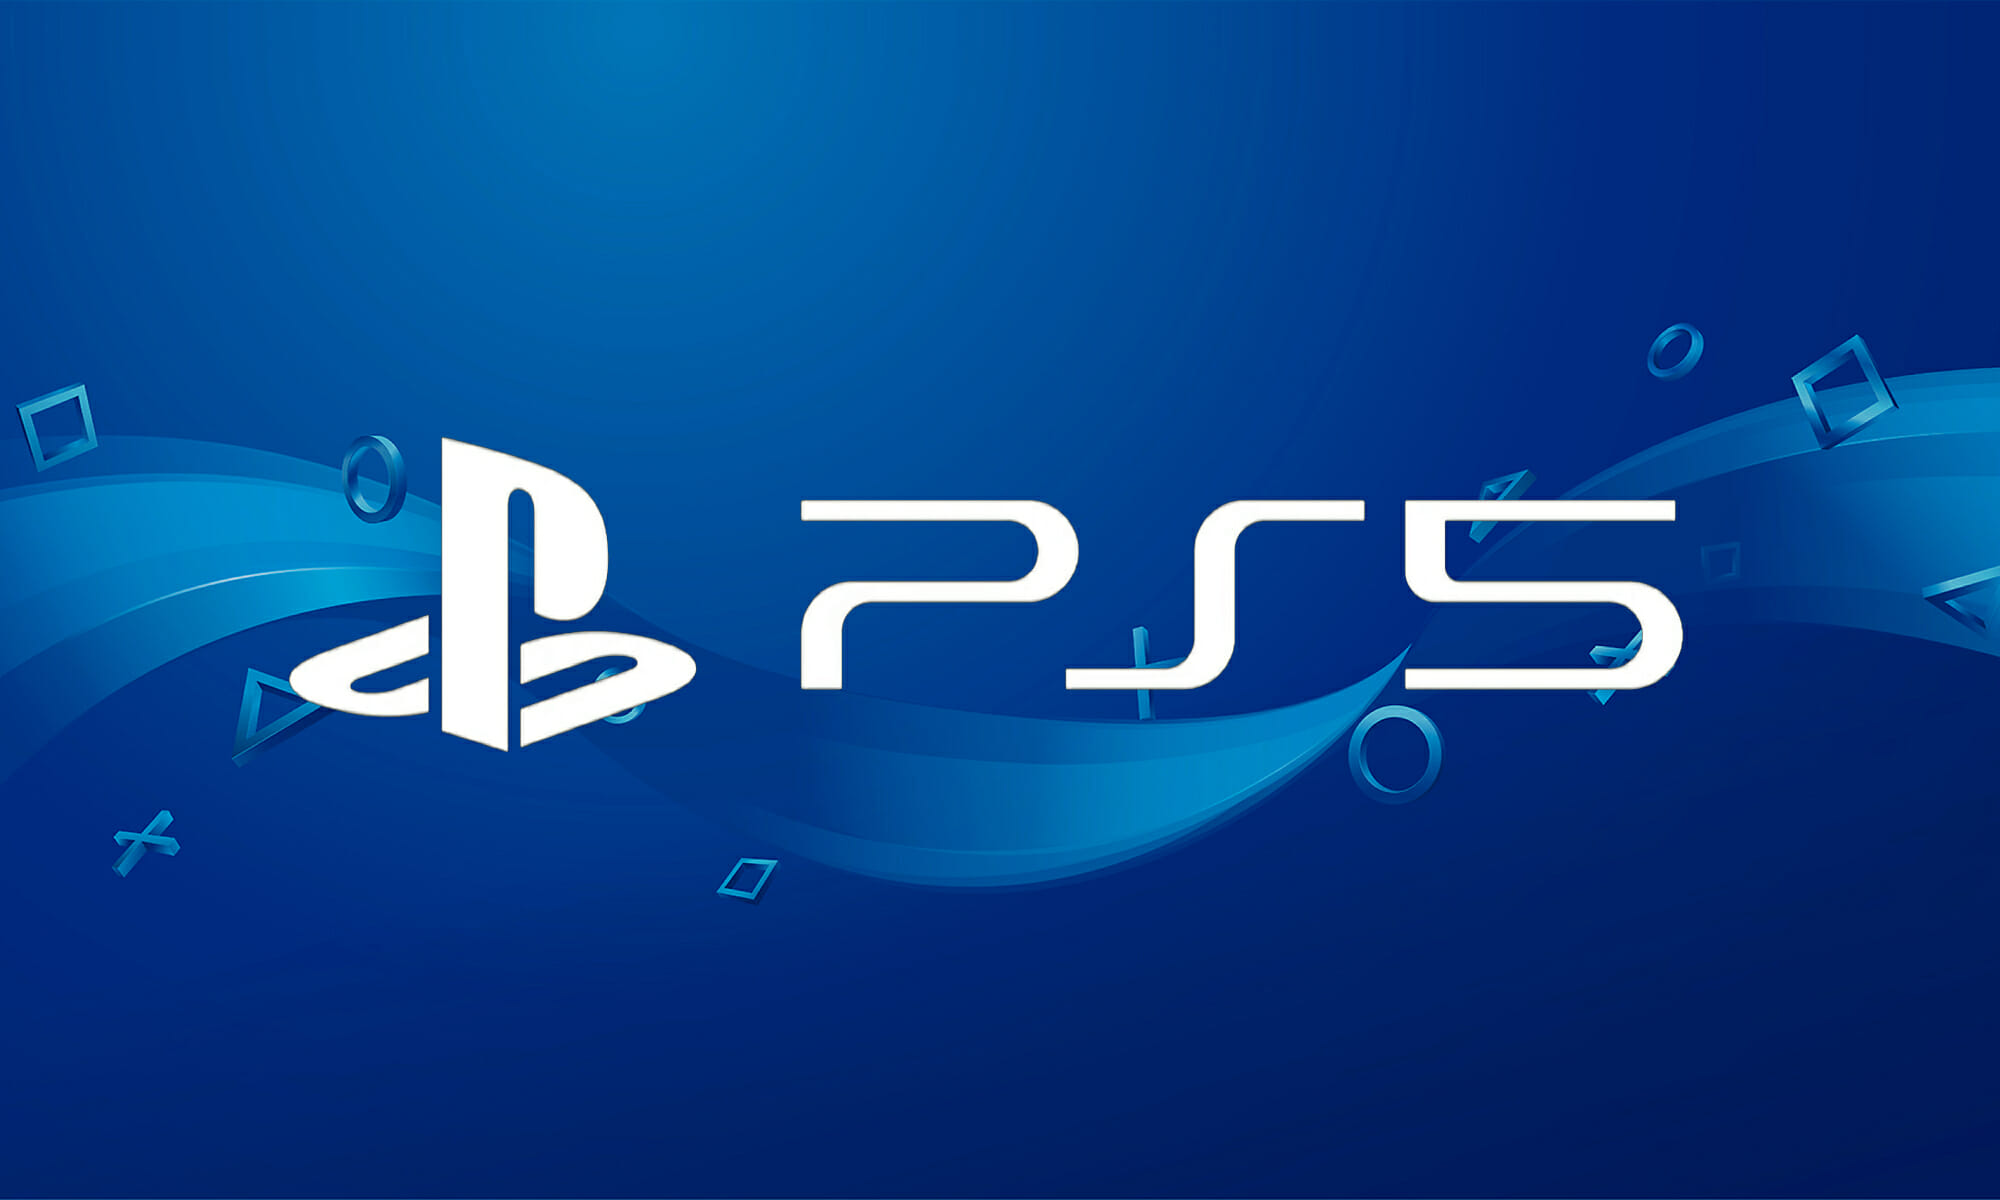 Пс 5 ютуб. PLAYSTATION 5. Sony PLAYSTATION 5 logo. PLAYSTATION ps5. PS 3 PS 4 PS 5 logo.